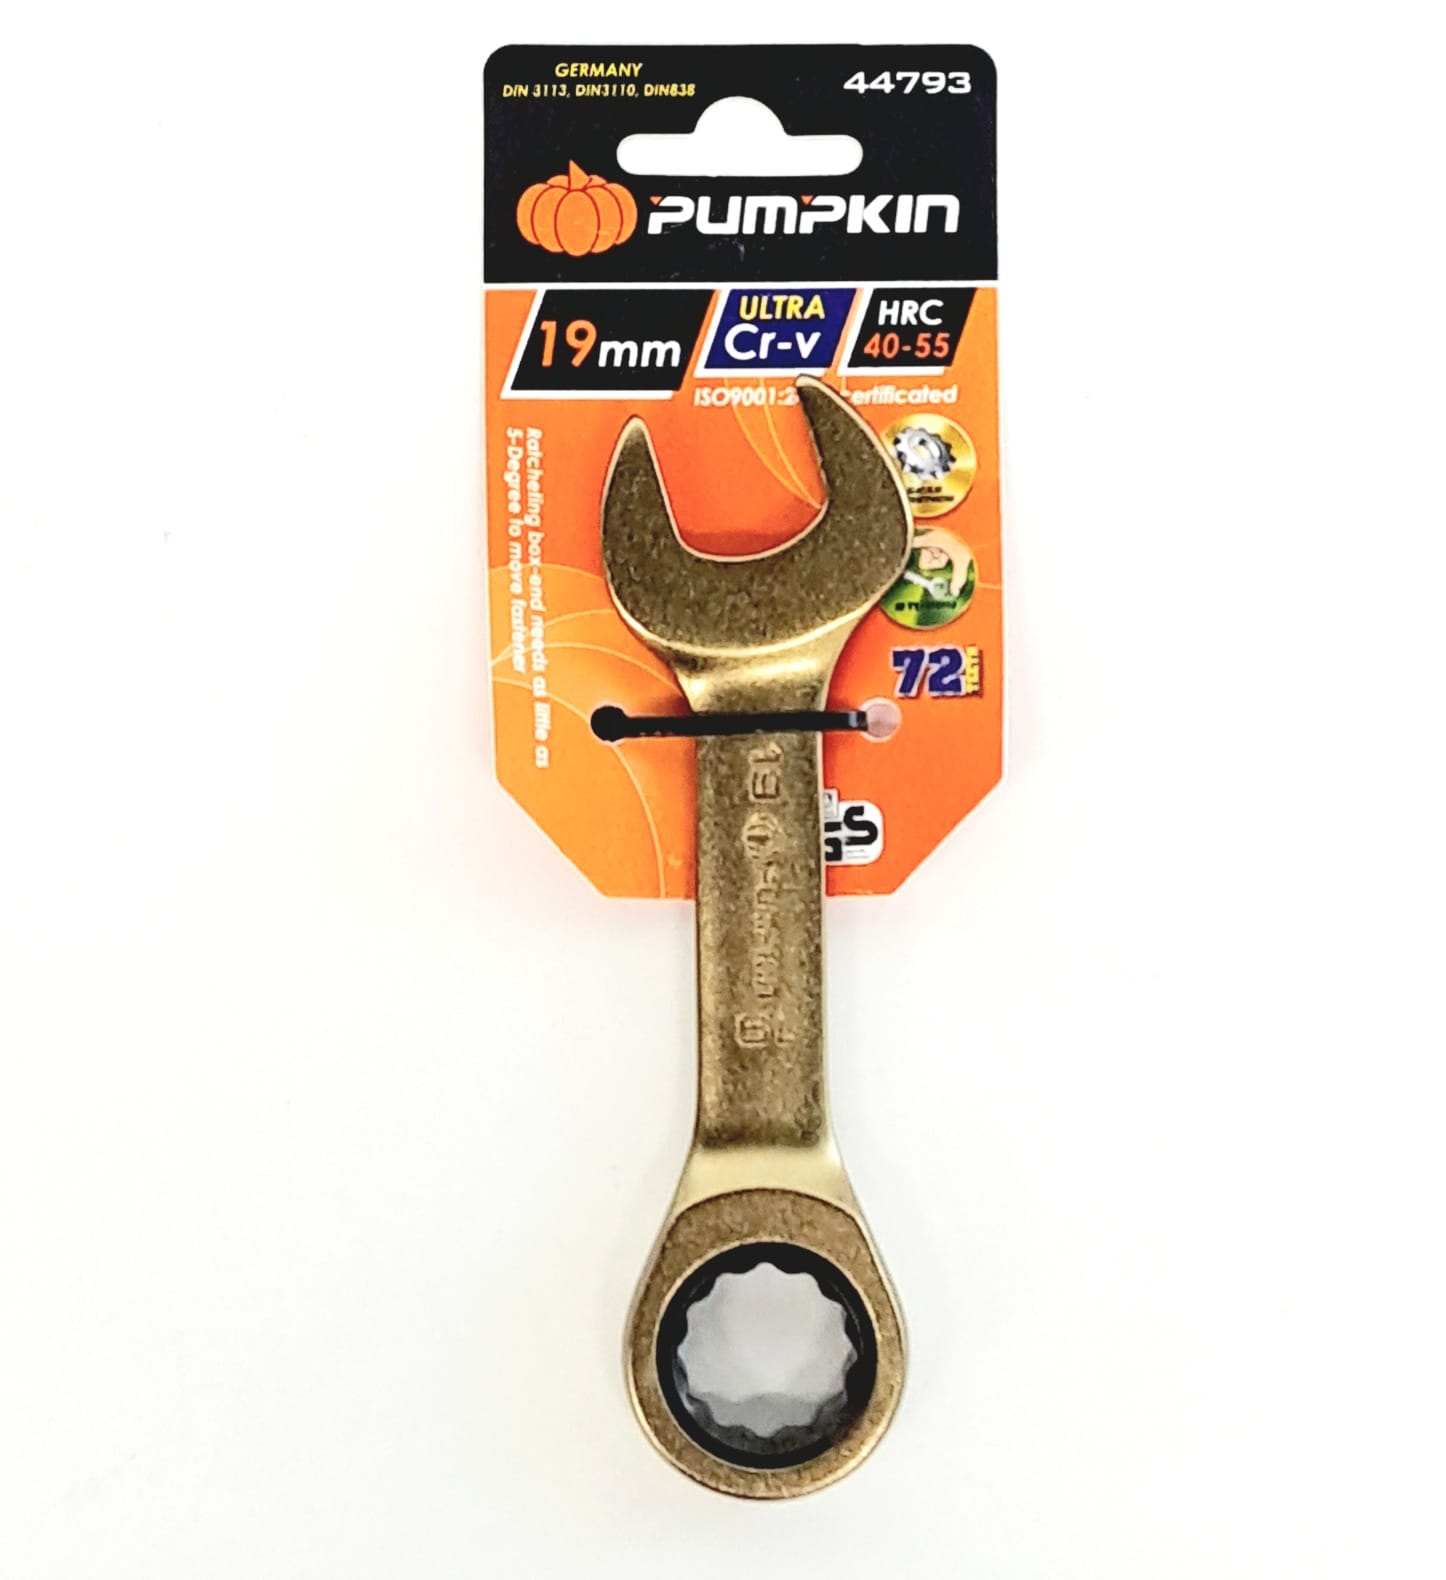 Pumpkin 44793 Ultra Cr-V 19mm Stubby Ratchet Wrench